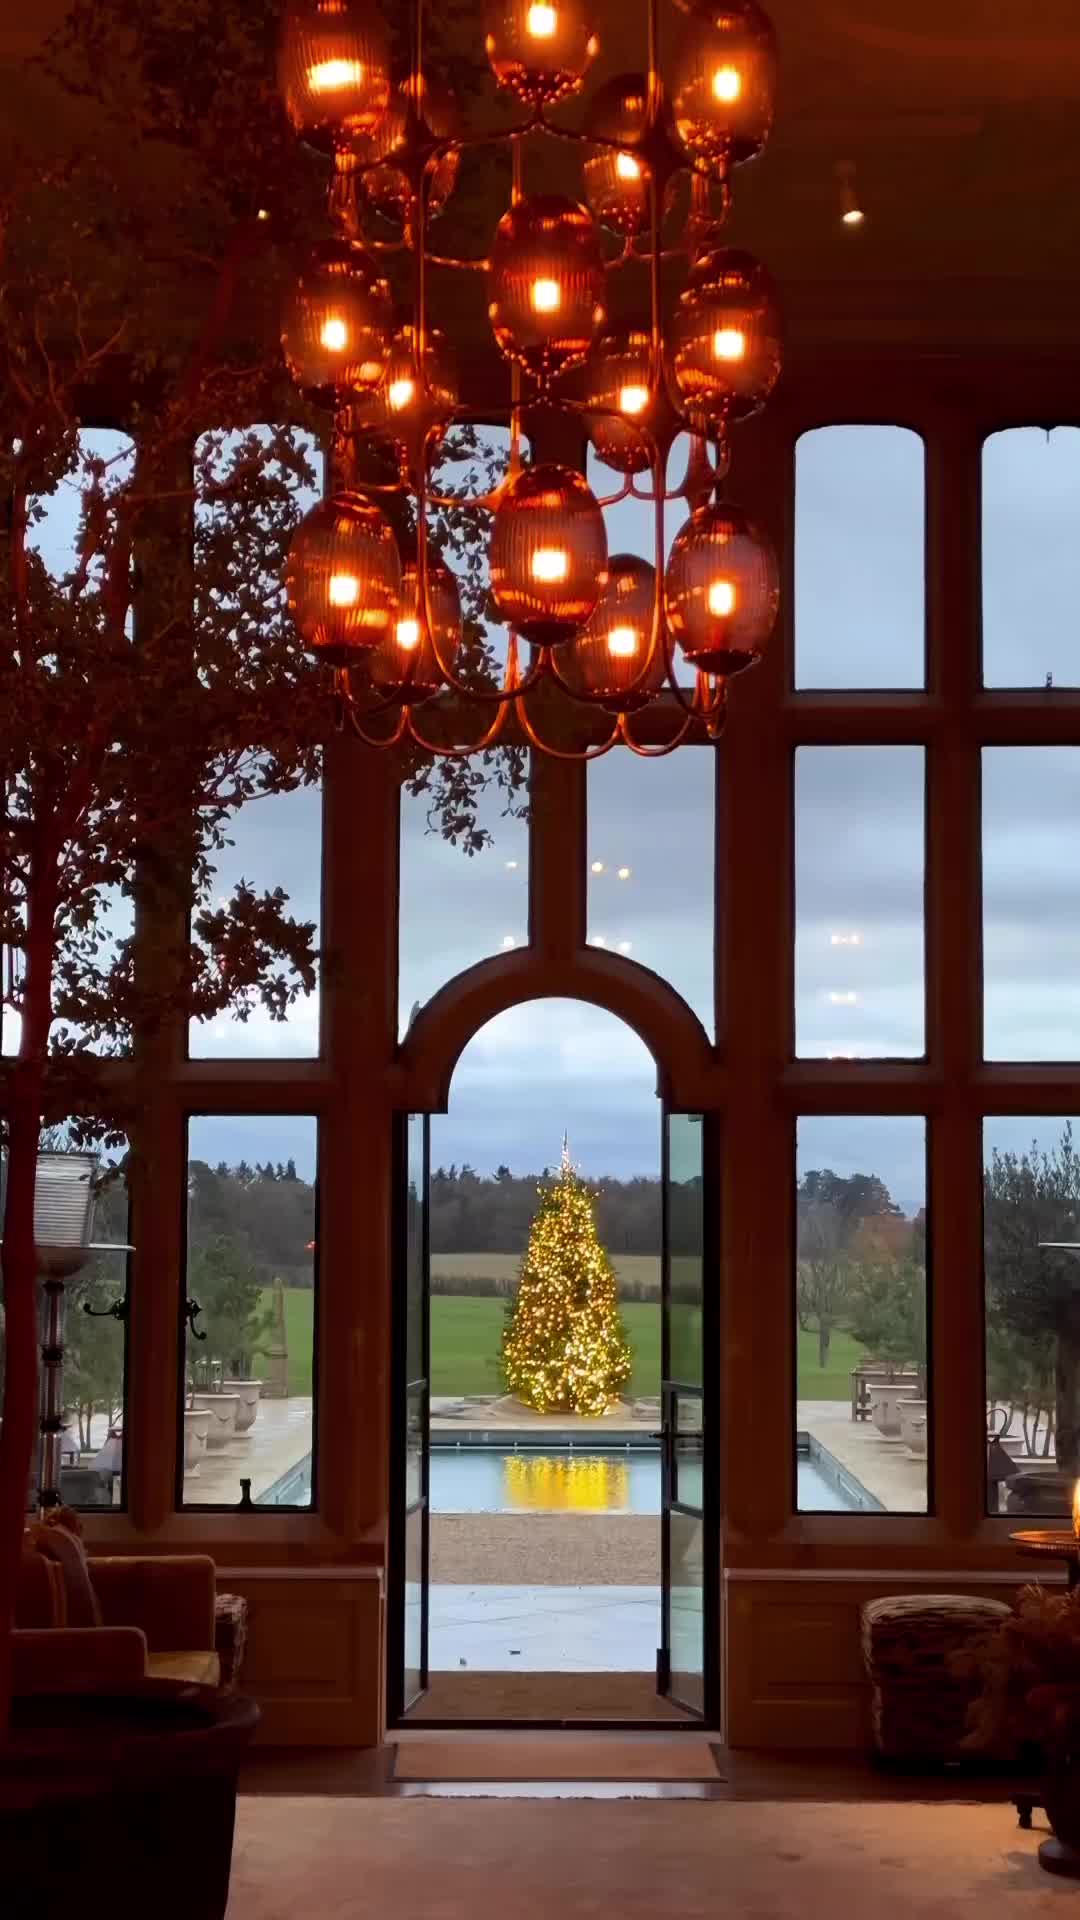 Merry Christmas at Estelle Manor in Witney, UK